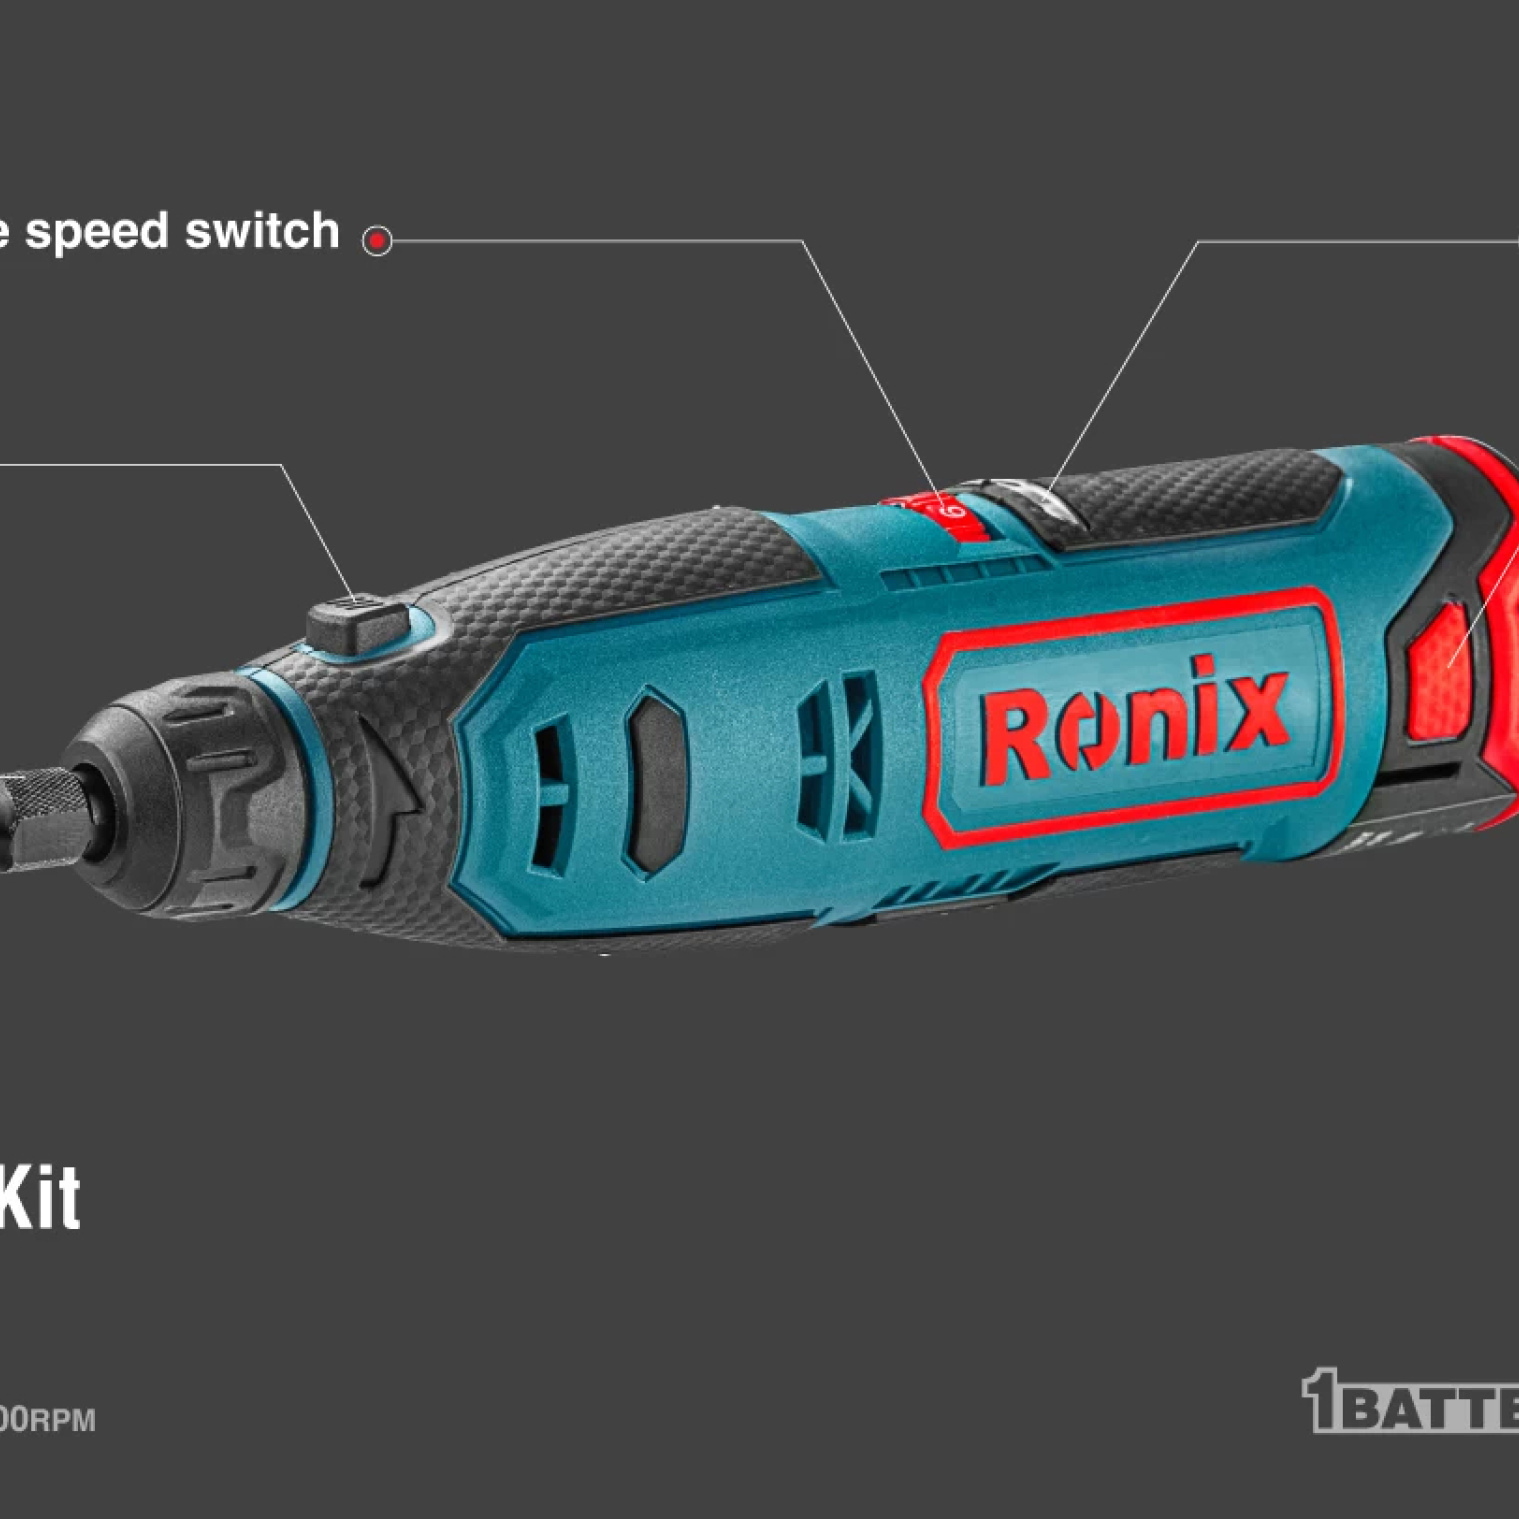  3.2mm, 12V, cordless, rotary, tool kit, RONIX 8102K